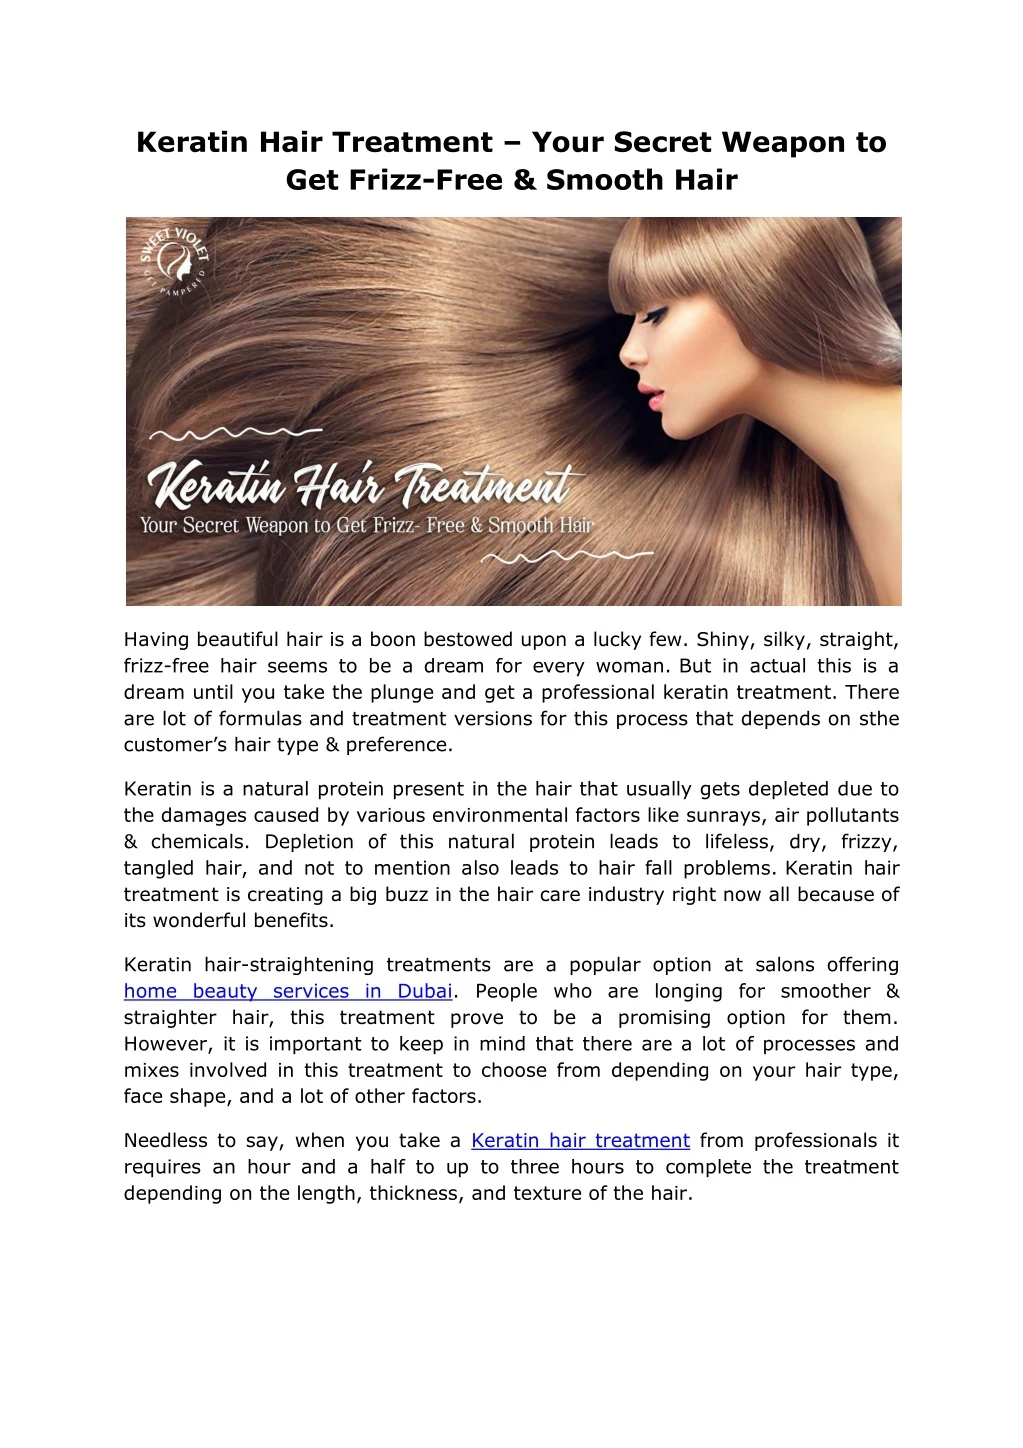 keratin hair treatment your secret weapon